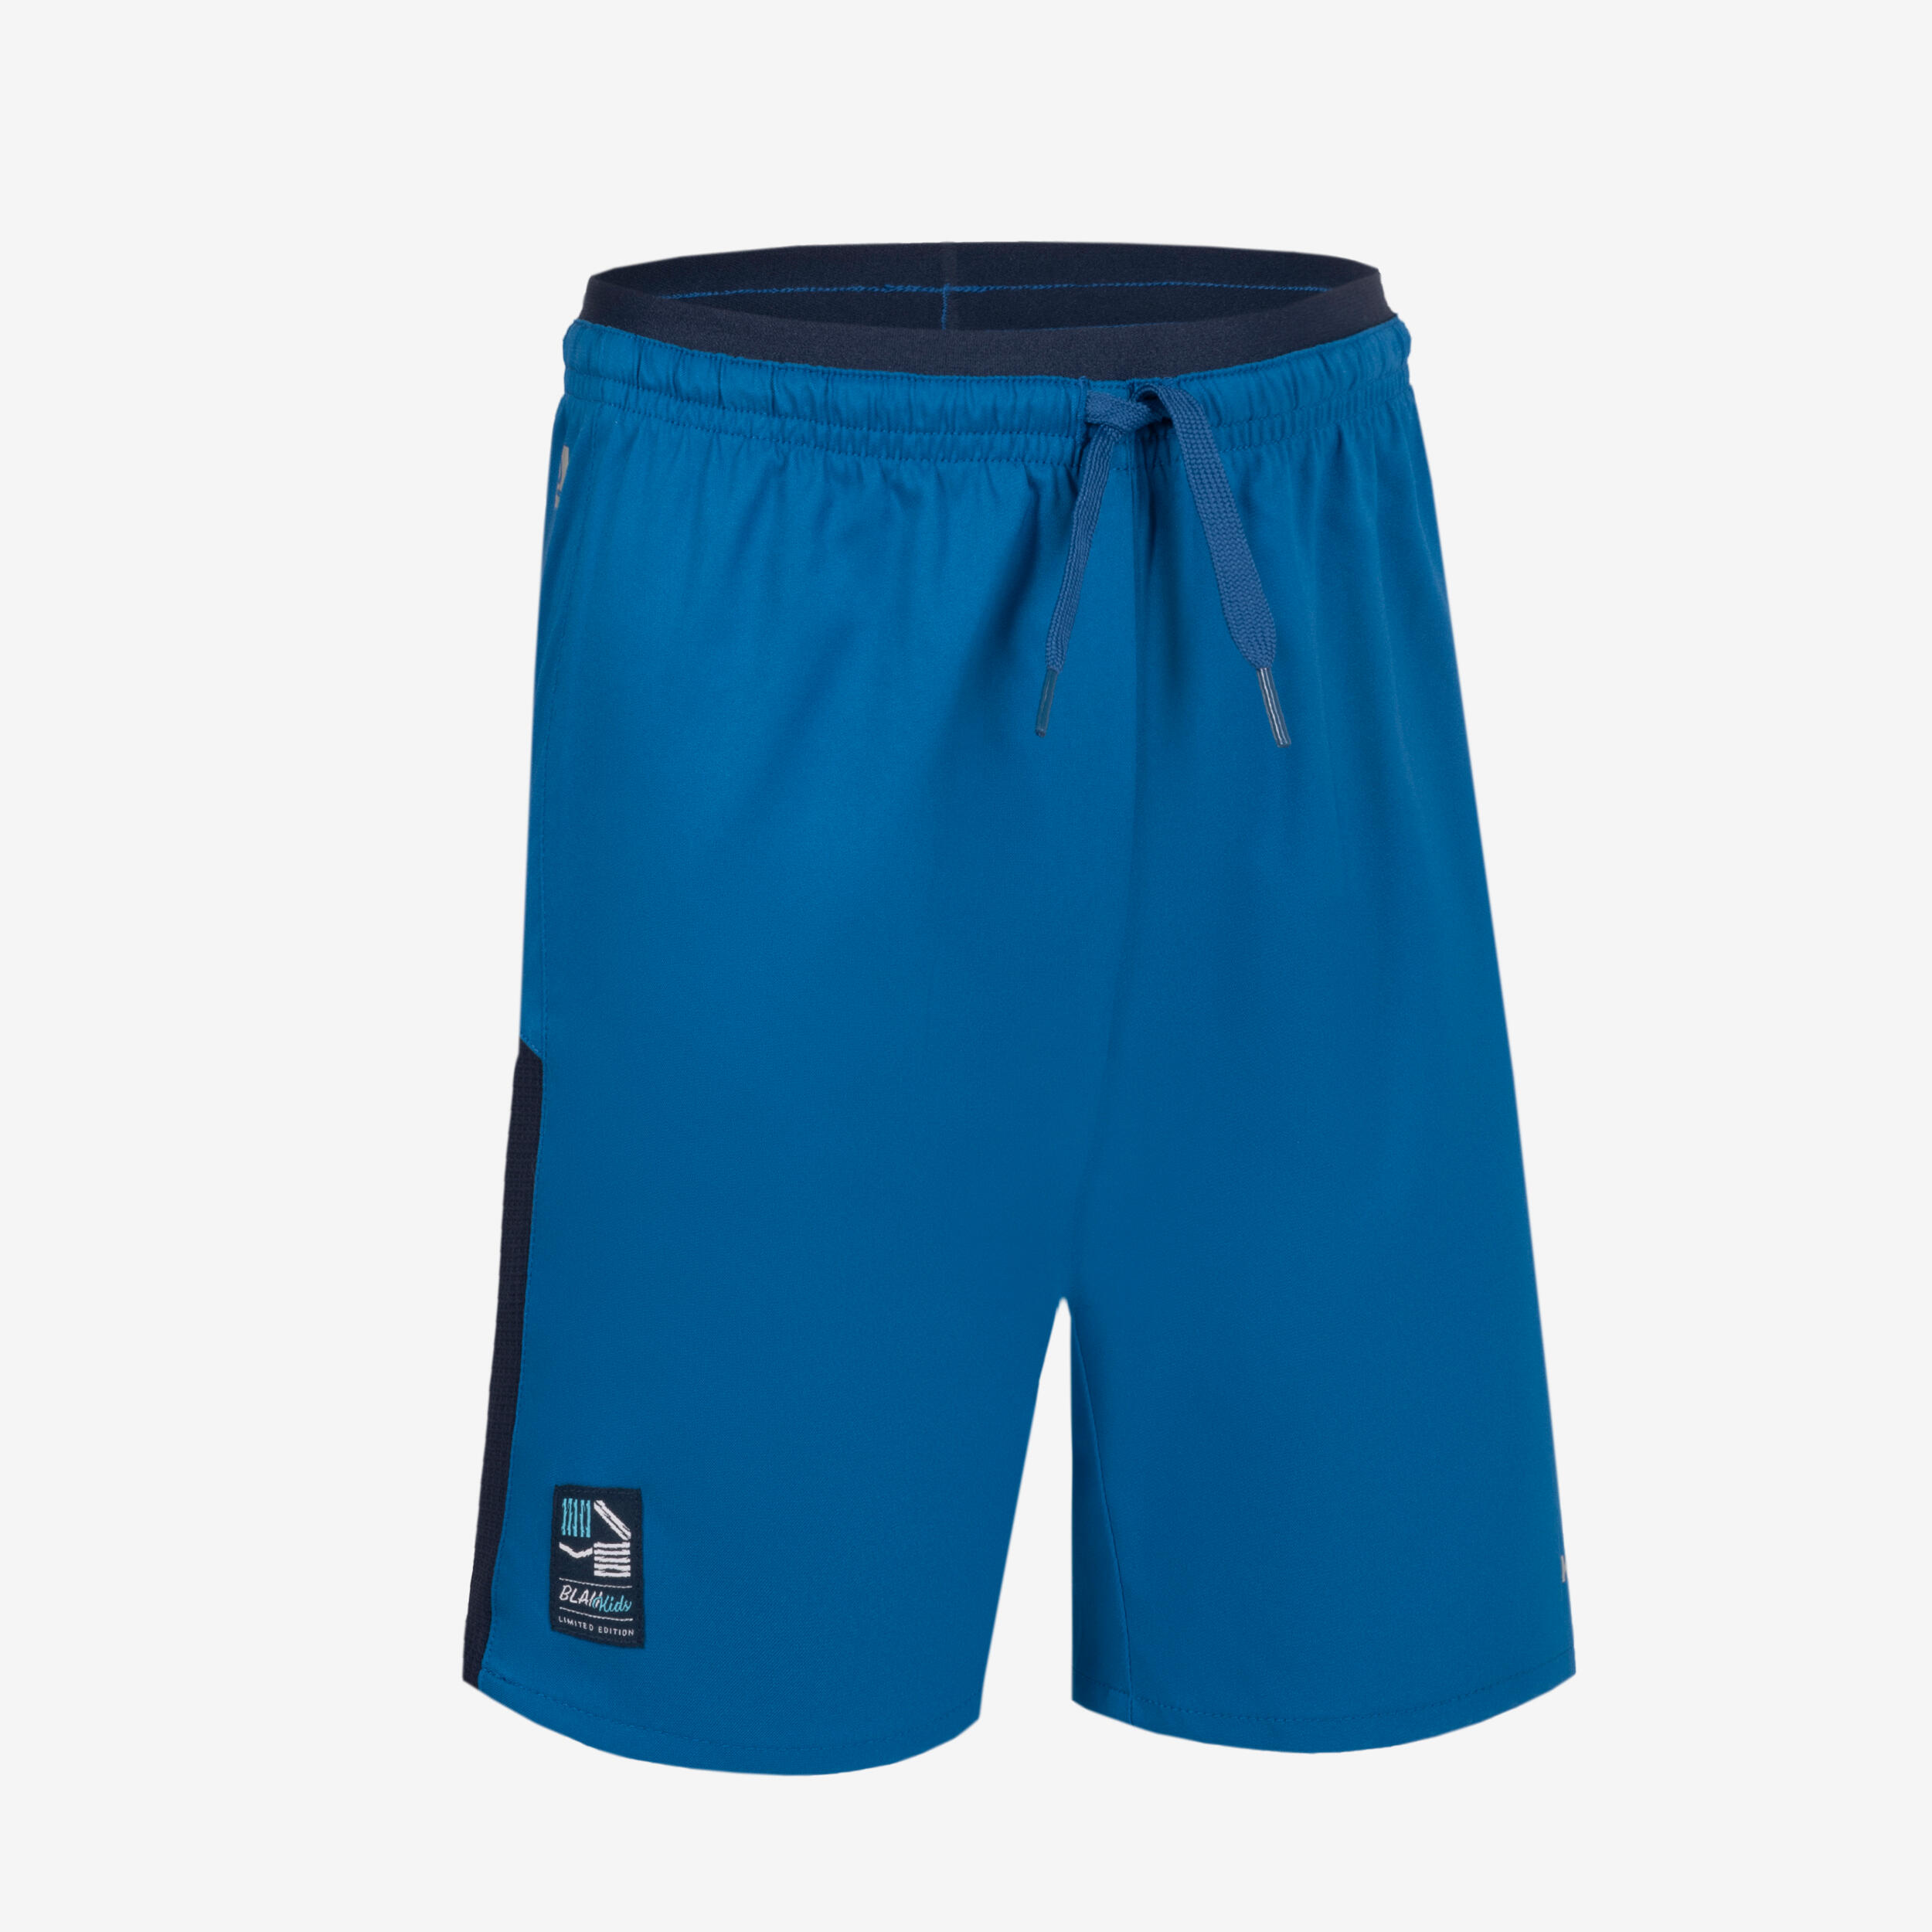 Kids' Football Shorts - Blue/Navy 1/6